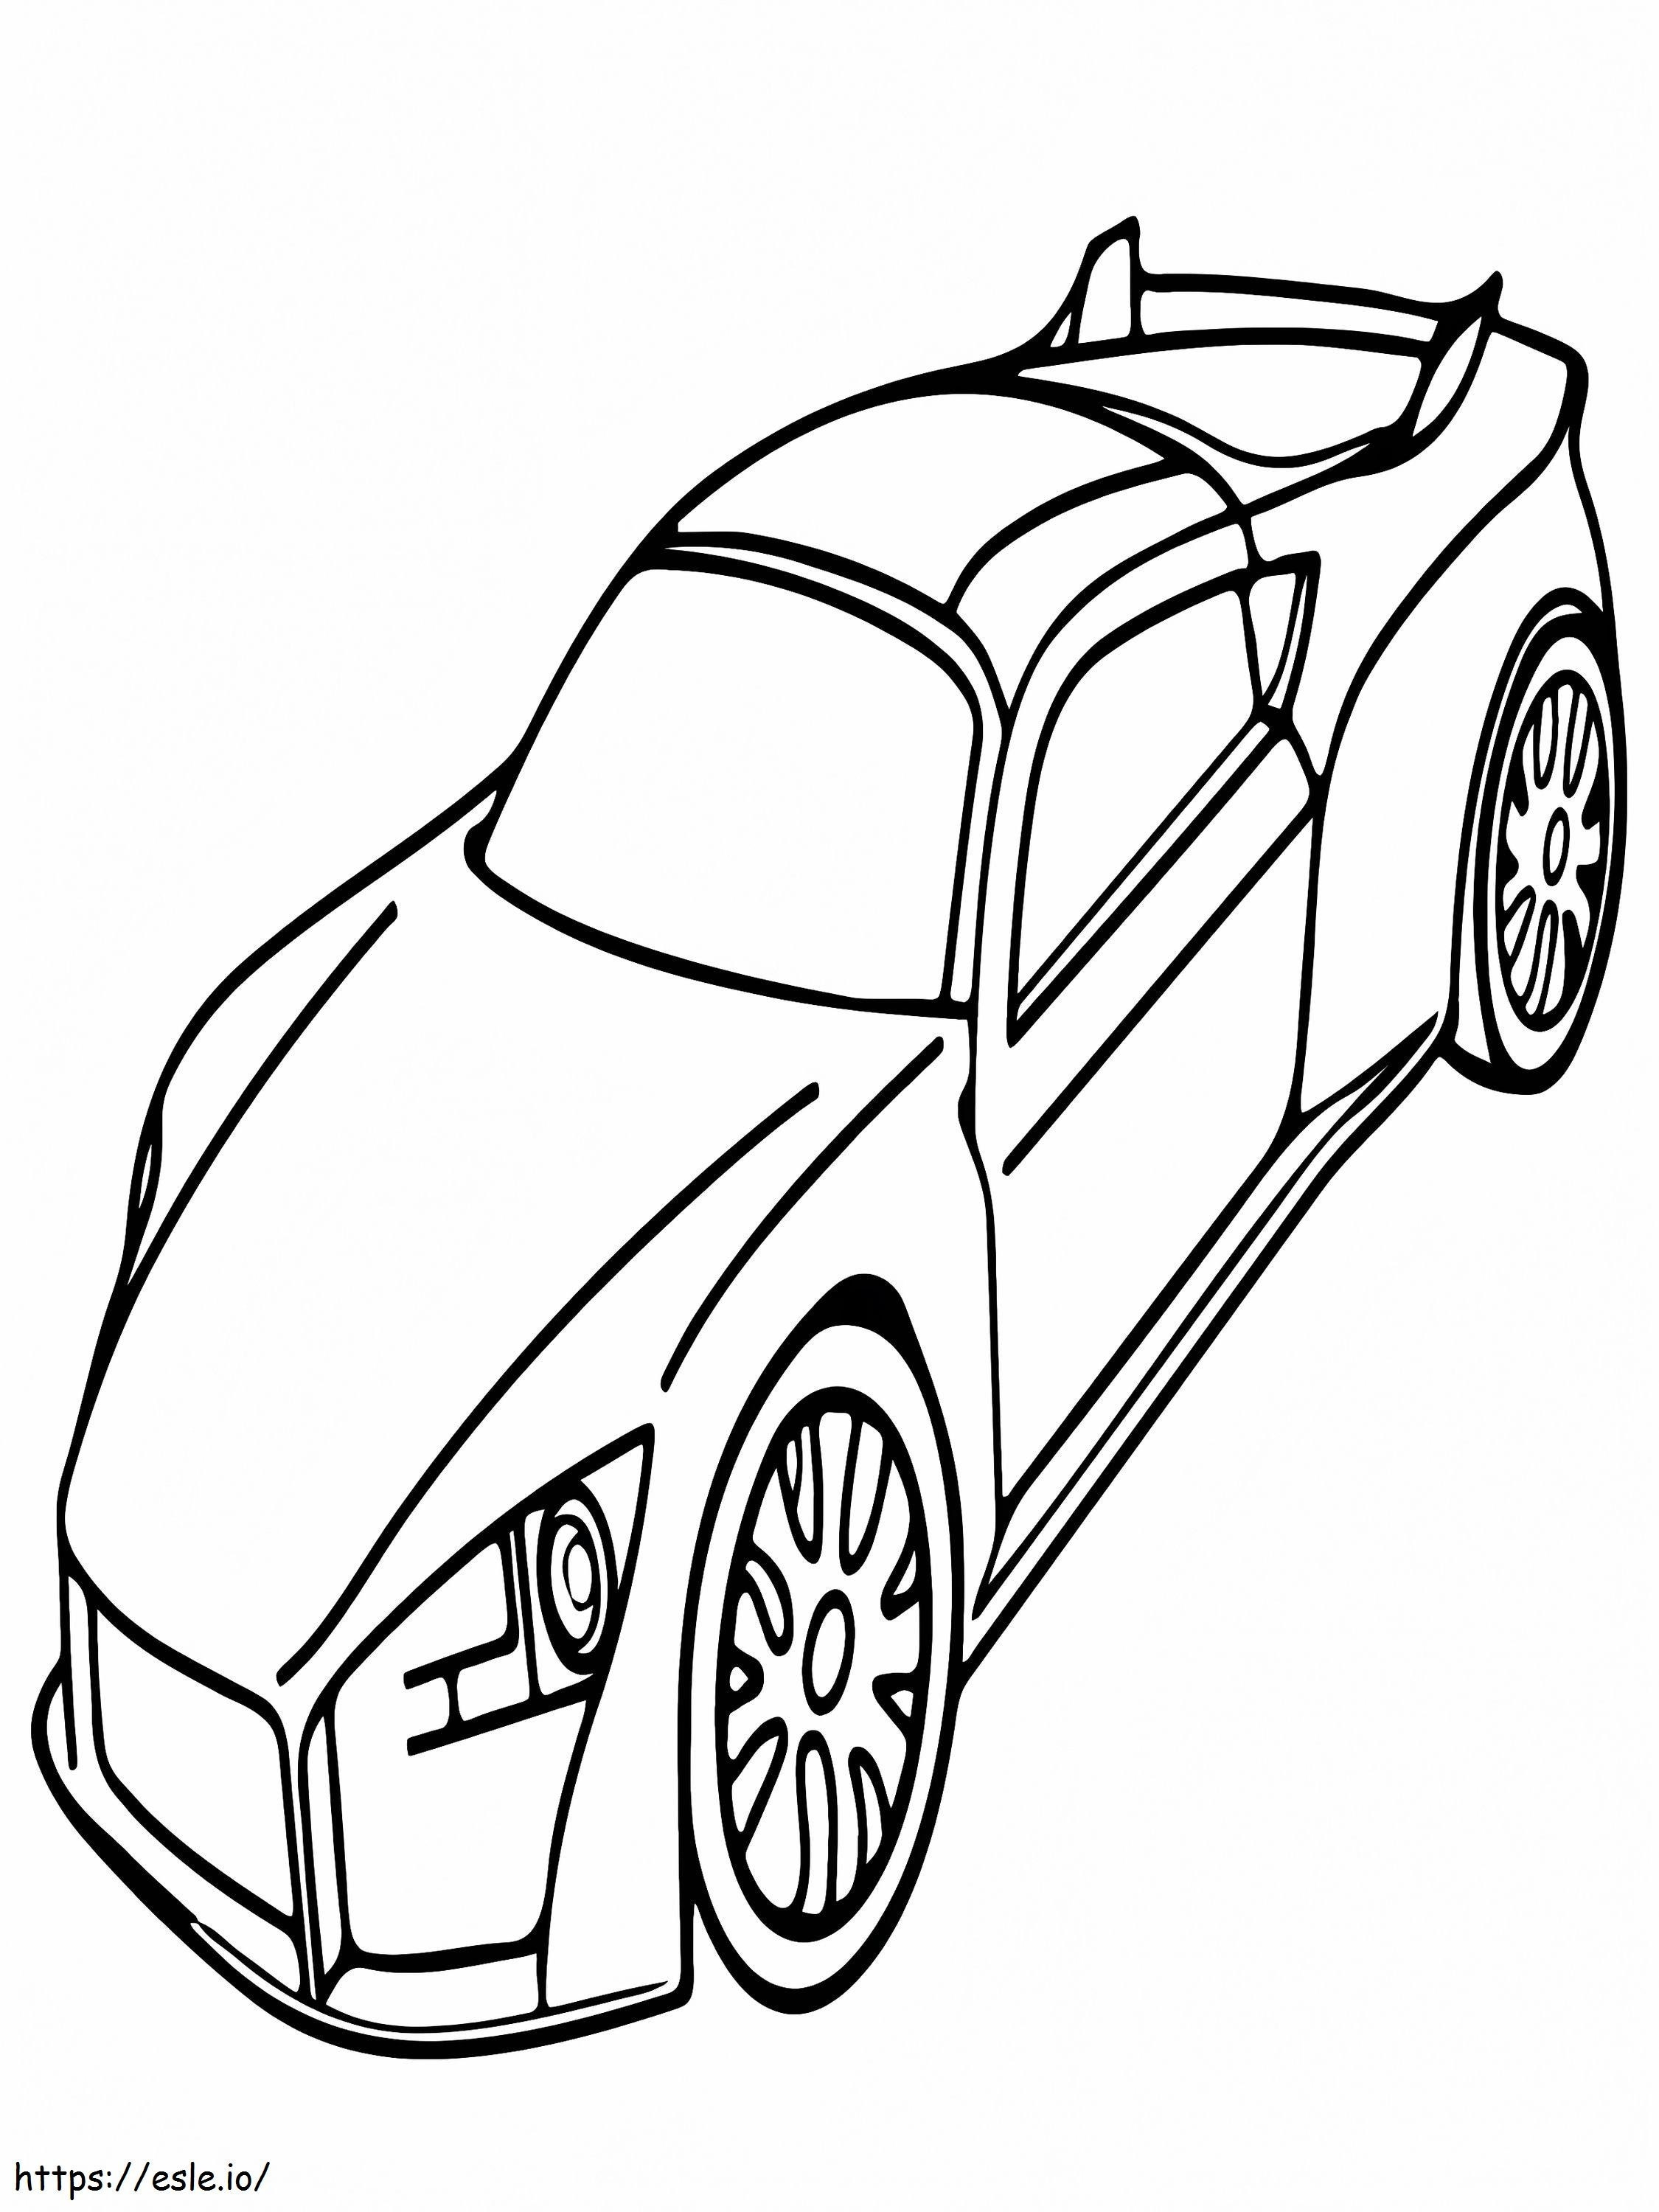 Simple Sport Car Design coloring page